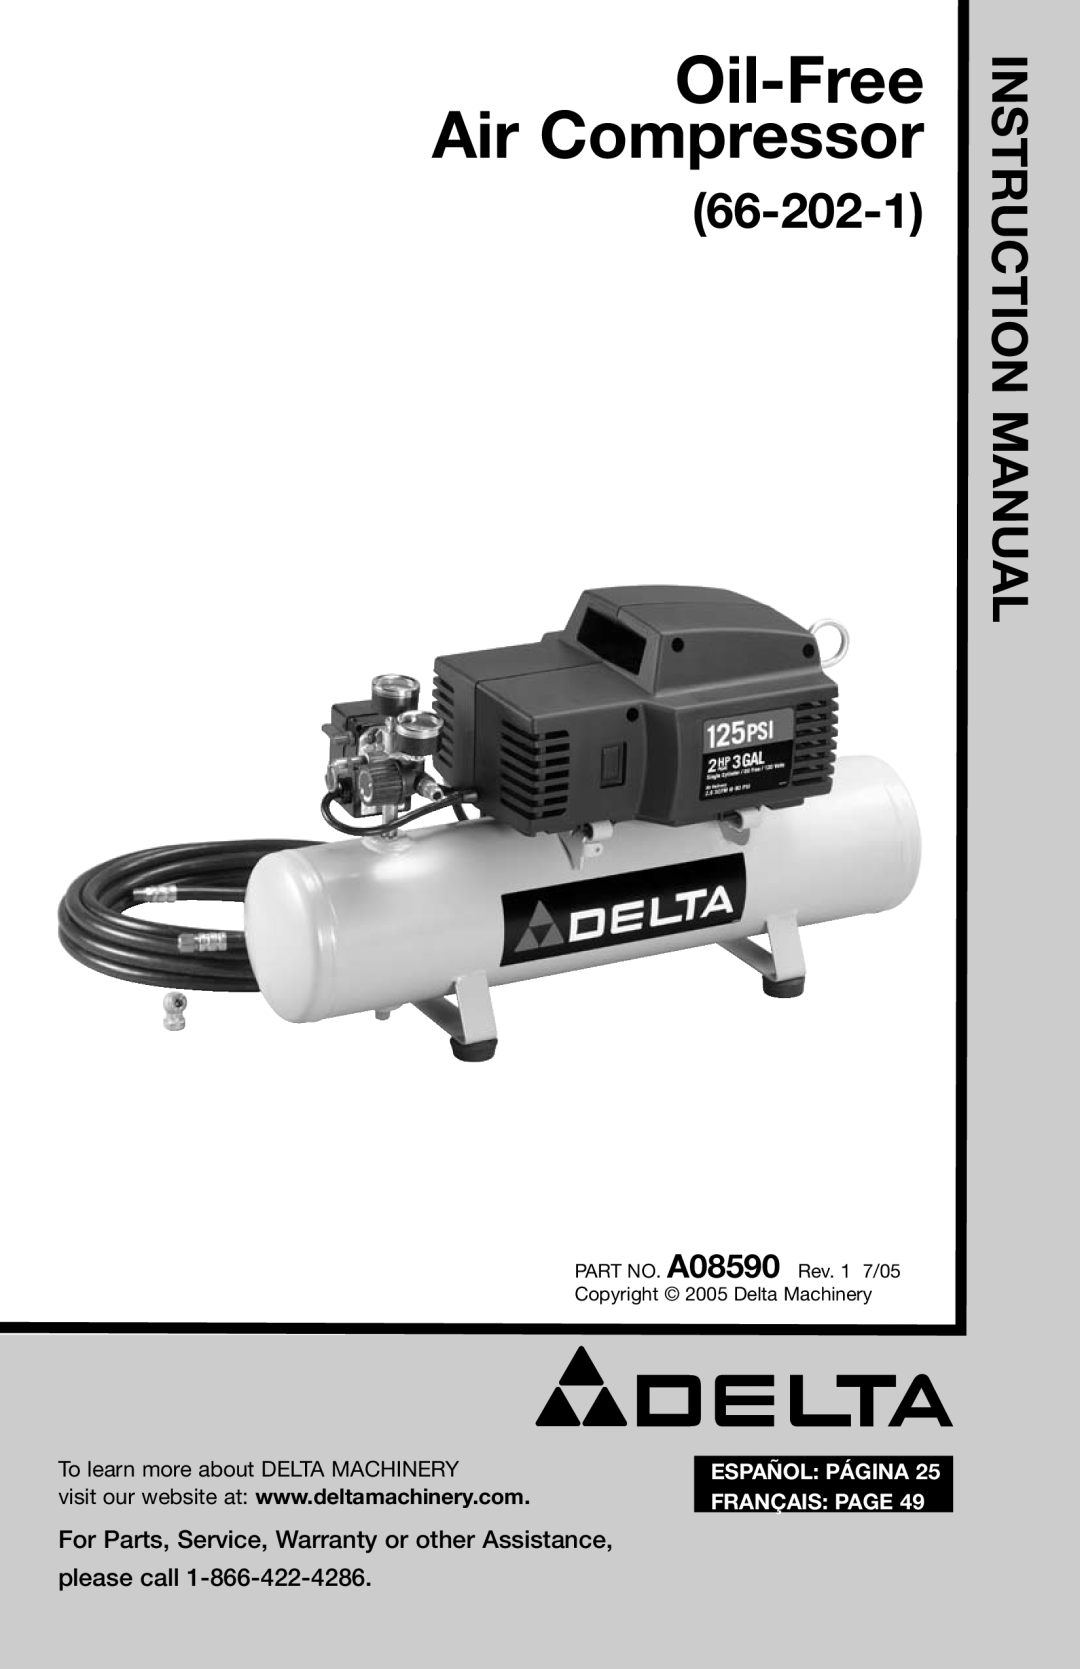 Delta A08590 instruction manual Oil-Free Air Compressor, 66-202-1, Instruction Manual, Español Página, Français Page 